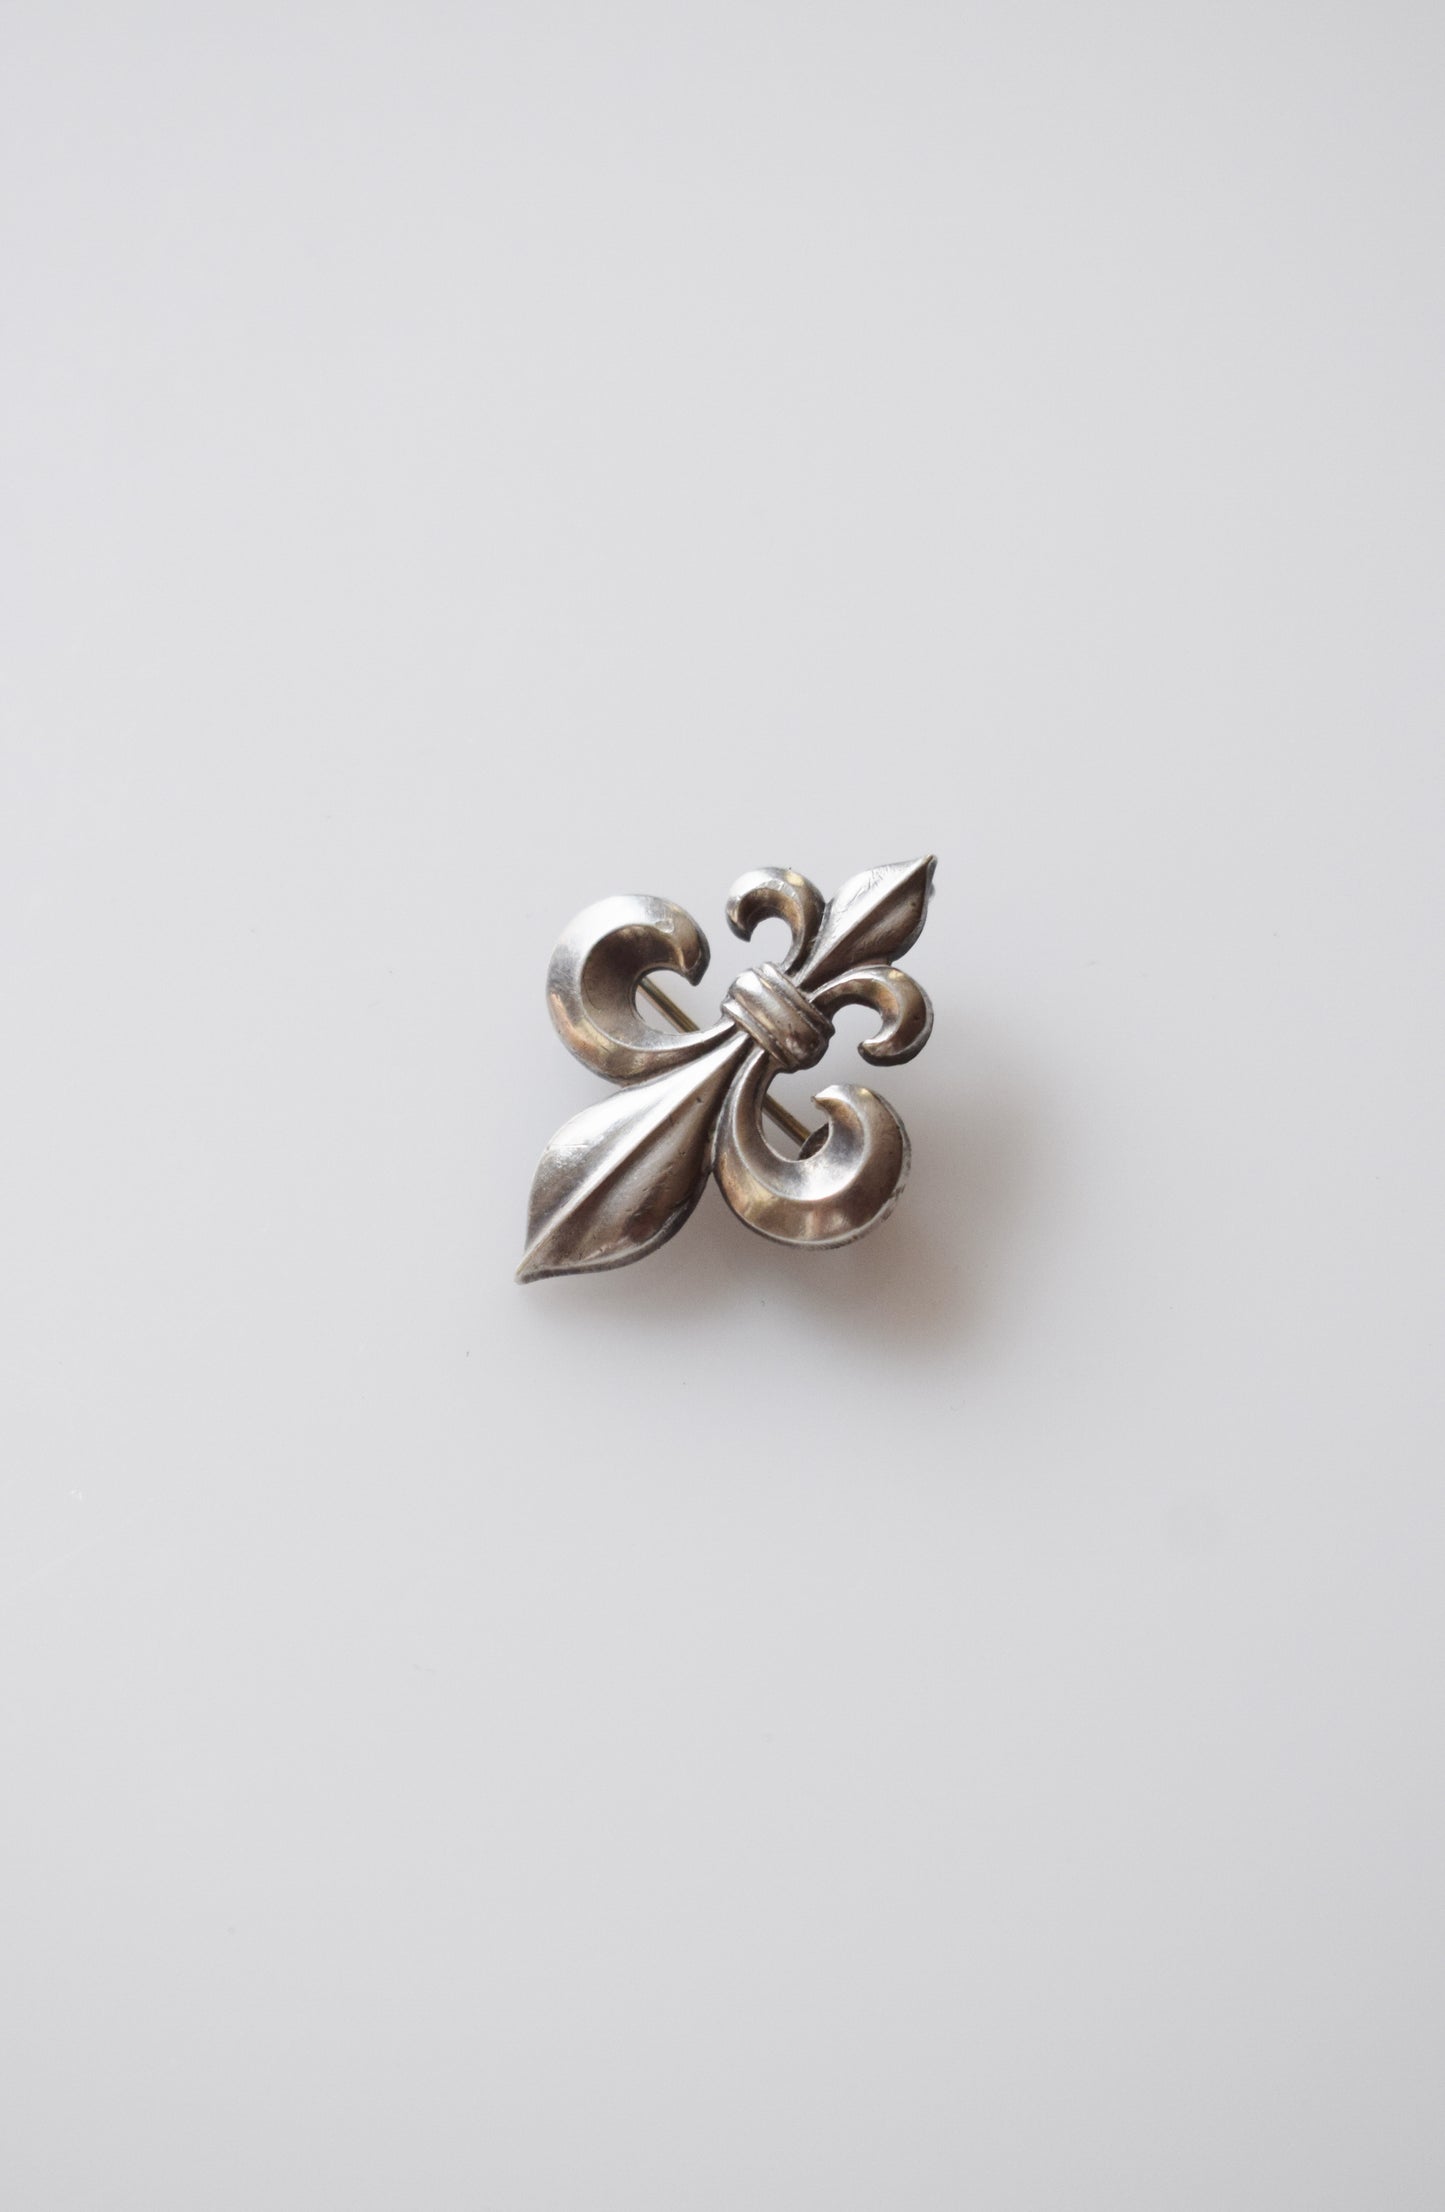 Antique Sterling Silver Fleur de Lis Brooch